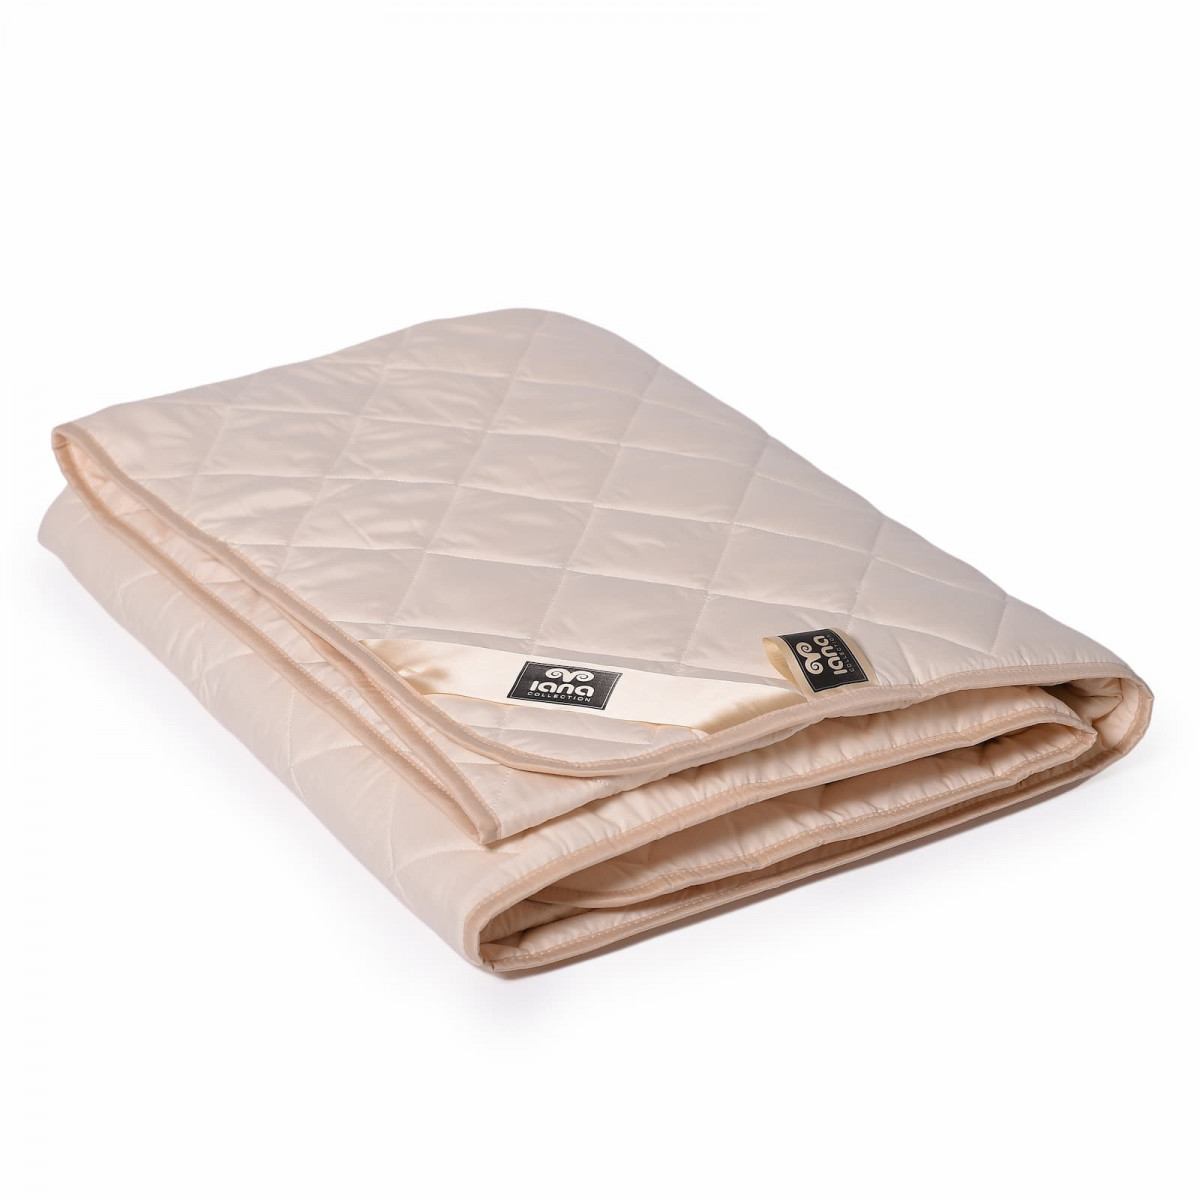 Одеяло Овечья шерсть теплое (172х205 см), размер 172х205 см bp765705 Одеяло Овечья шерсть теплое (172х205 см) - фото 1